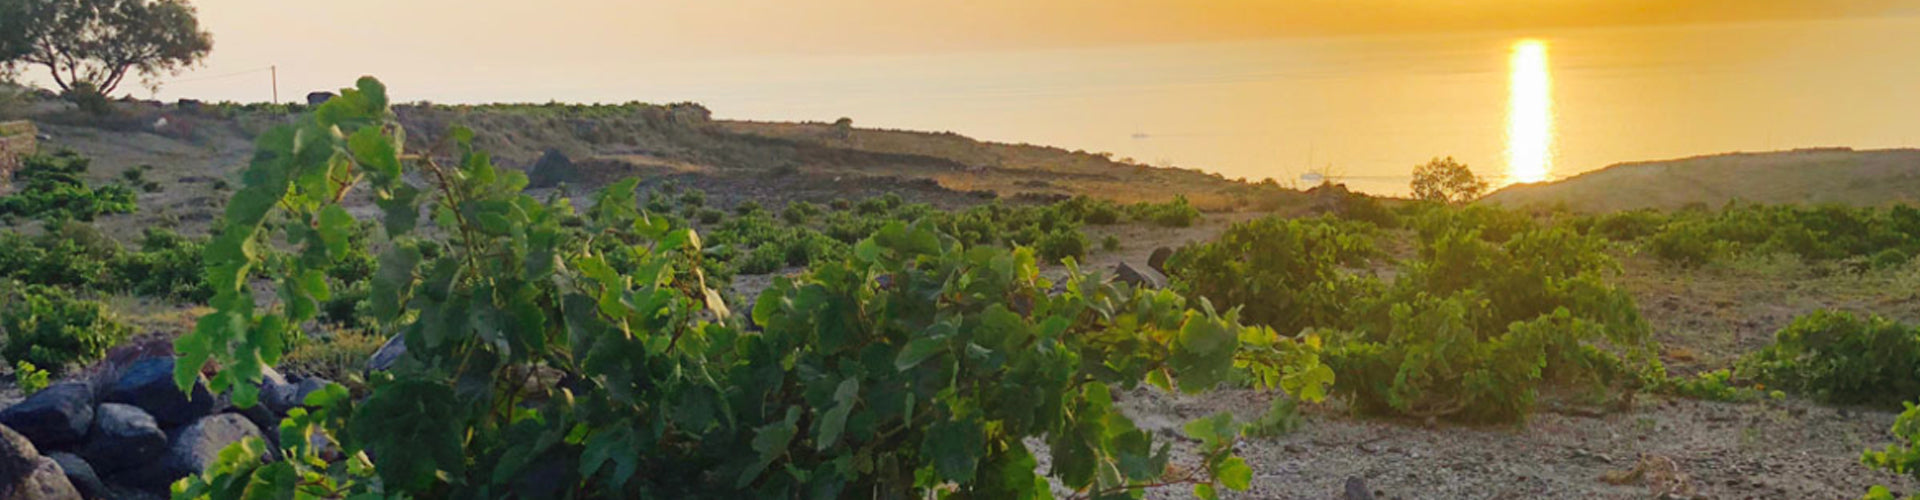 Vineyards of the Aegean Islands in Greece